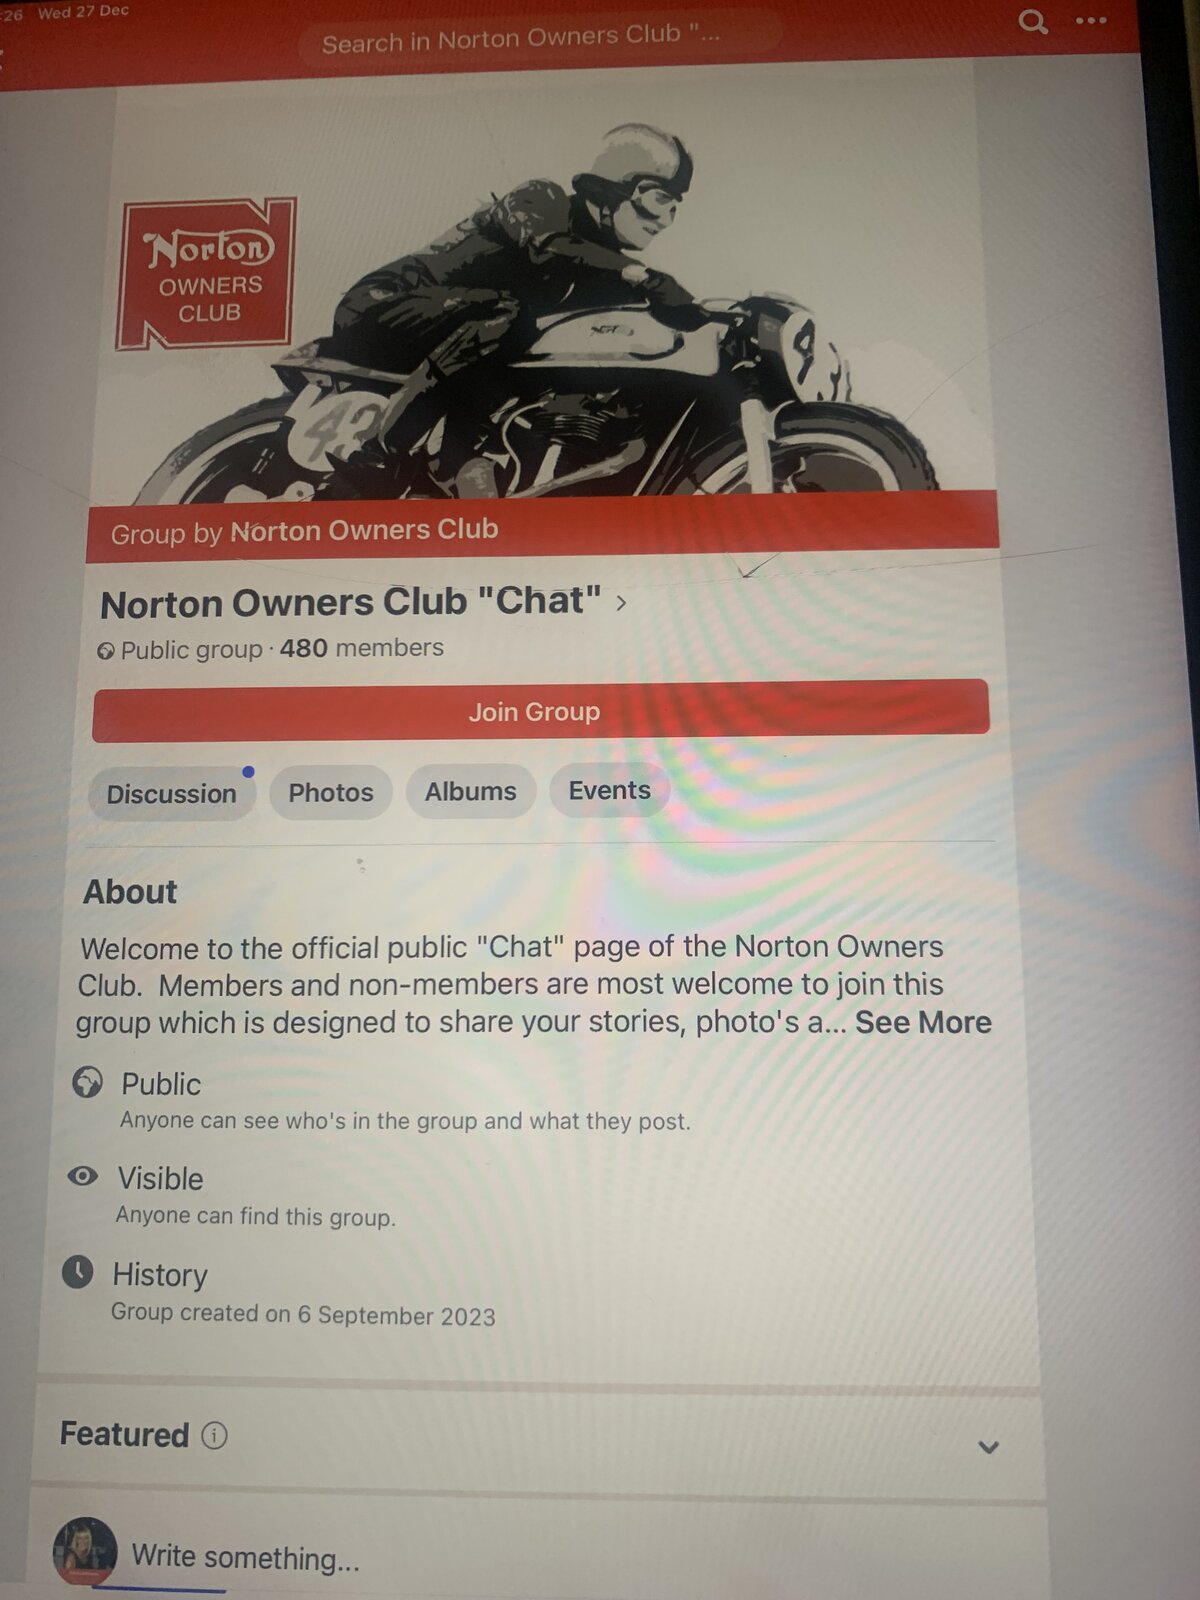 Norton 961 on Facebook & other social media